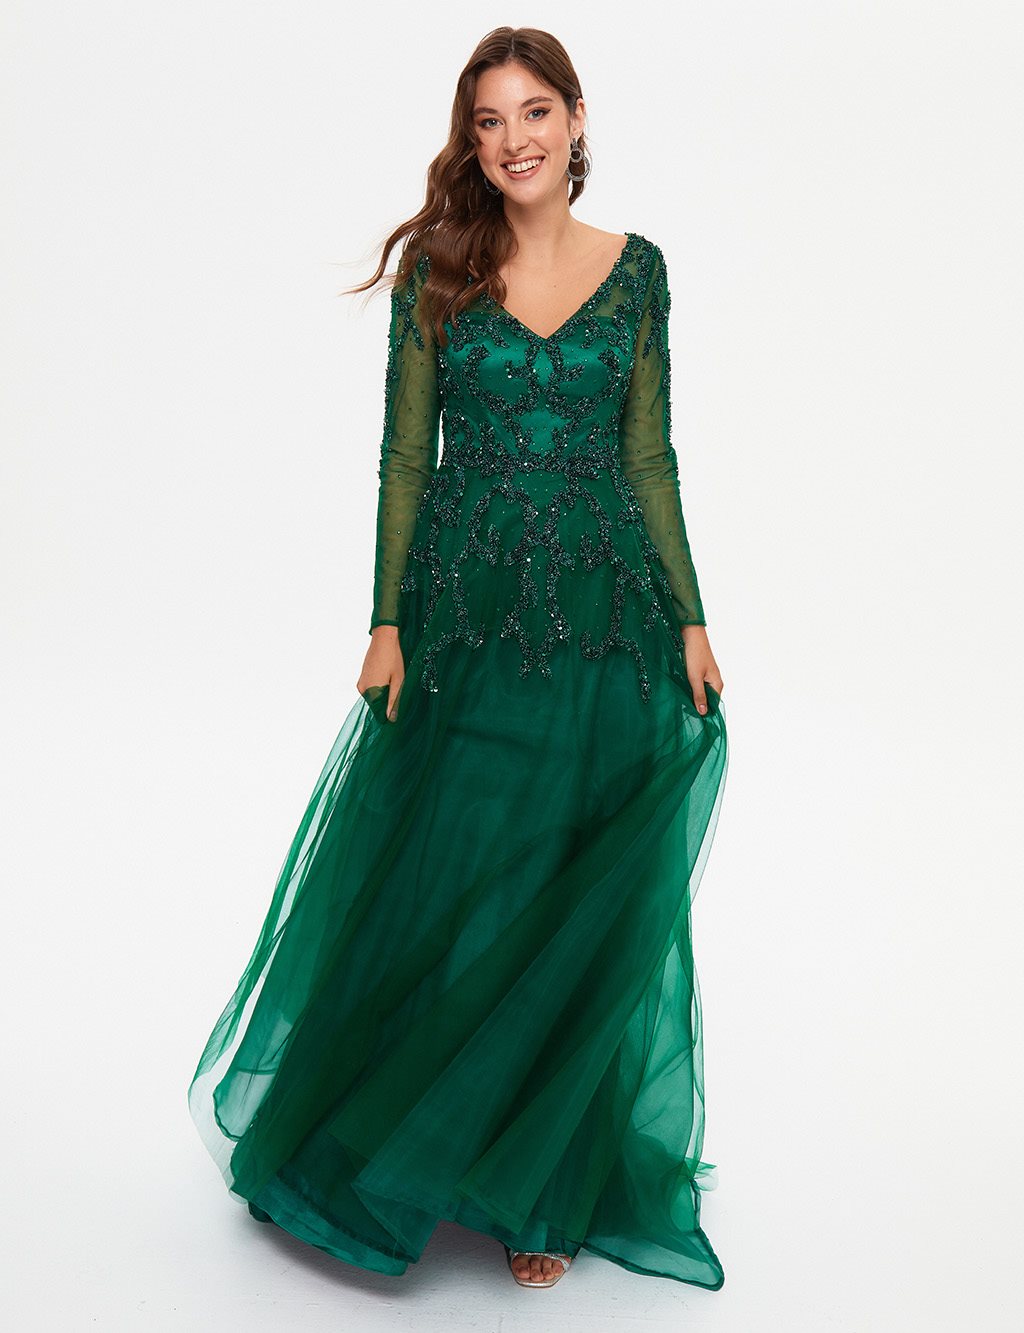 TIARA Tulle Skirt Deep V Neck Evening Dress Emerald